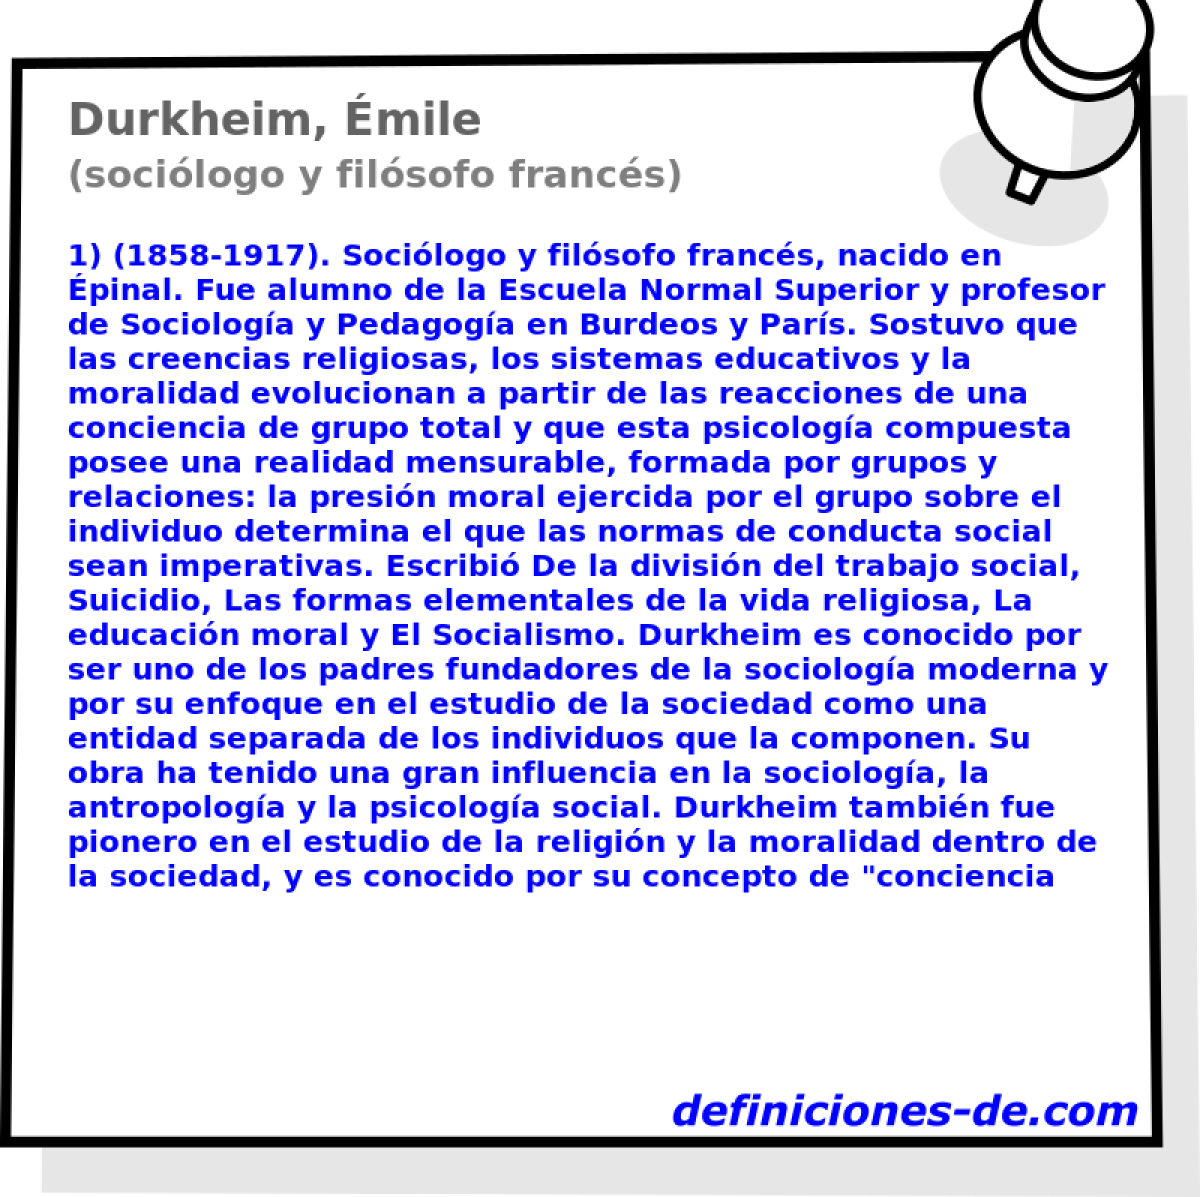 Durkheim, mile (socilogo y filsofo francs)